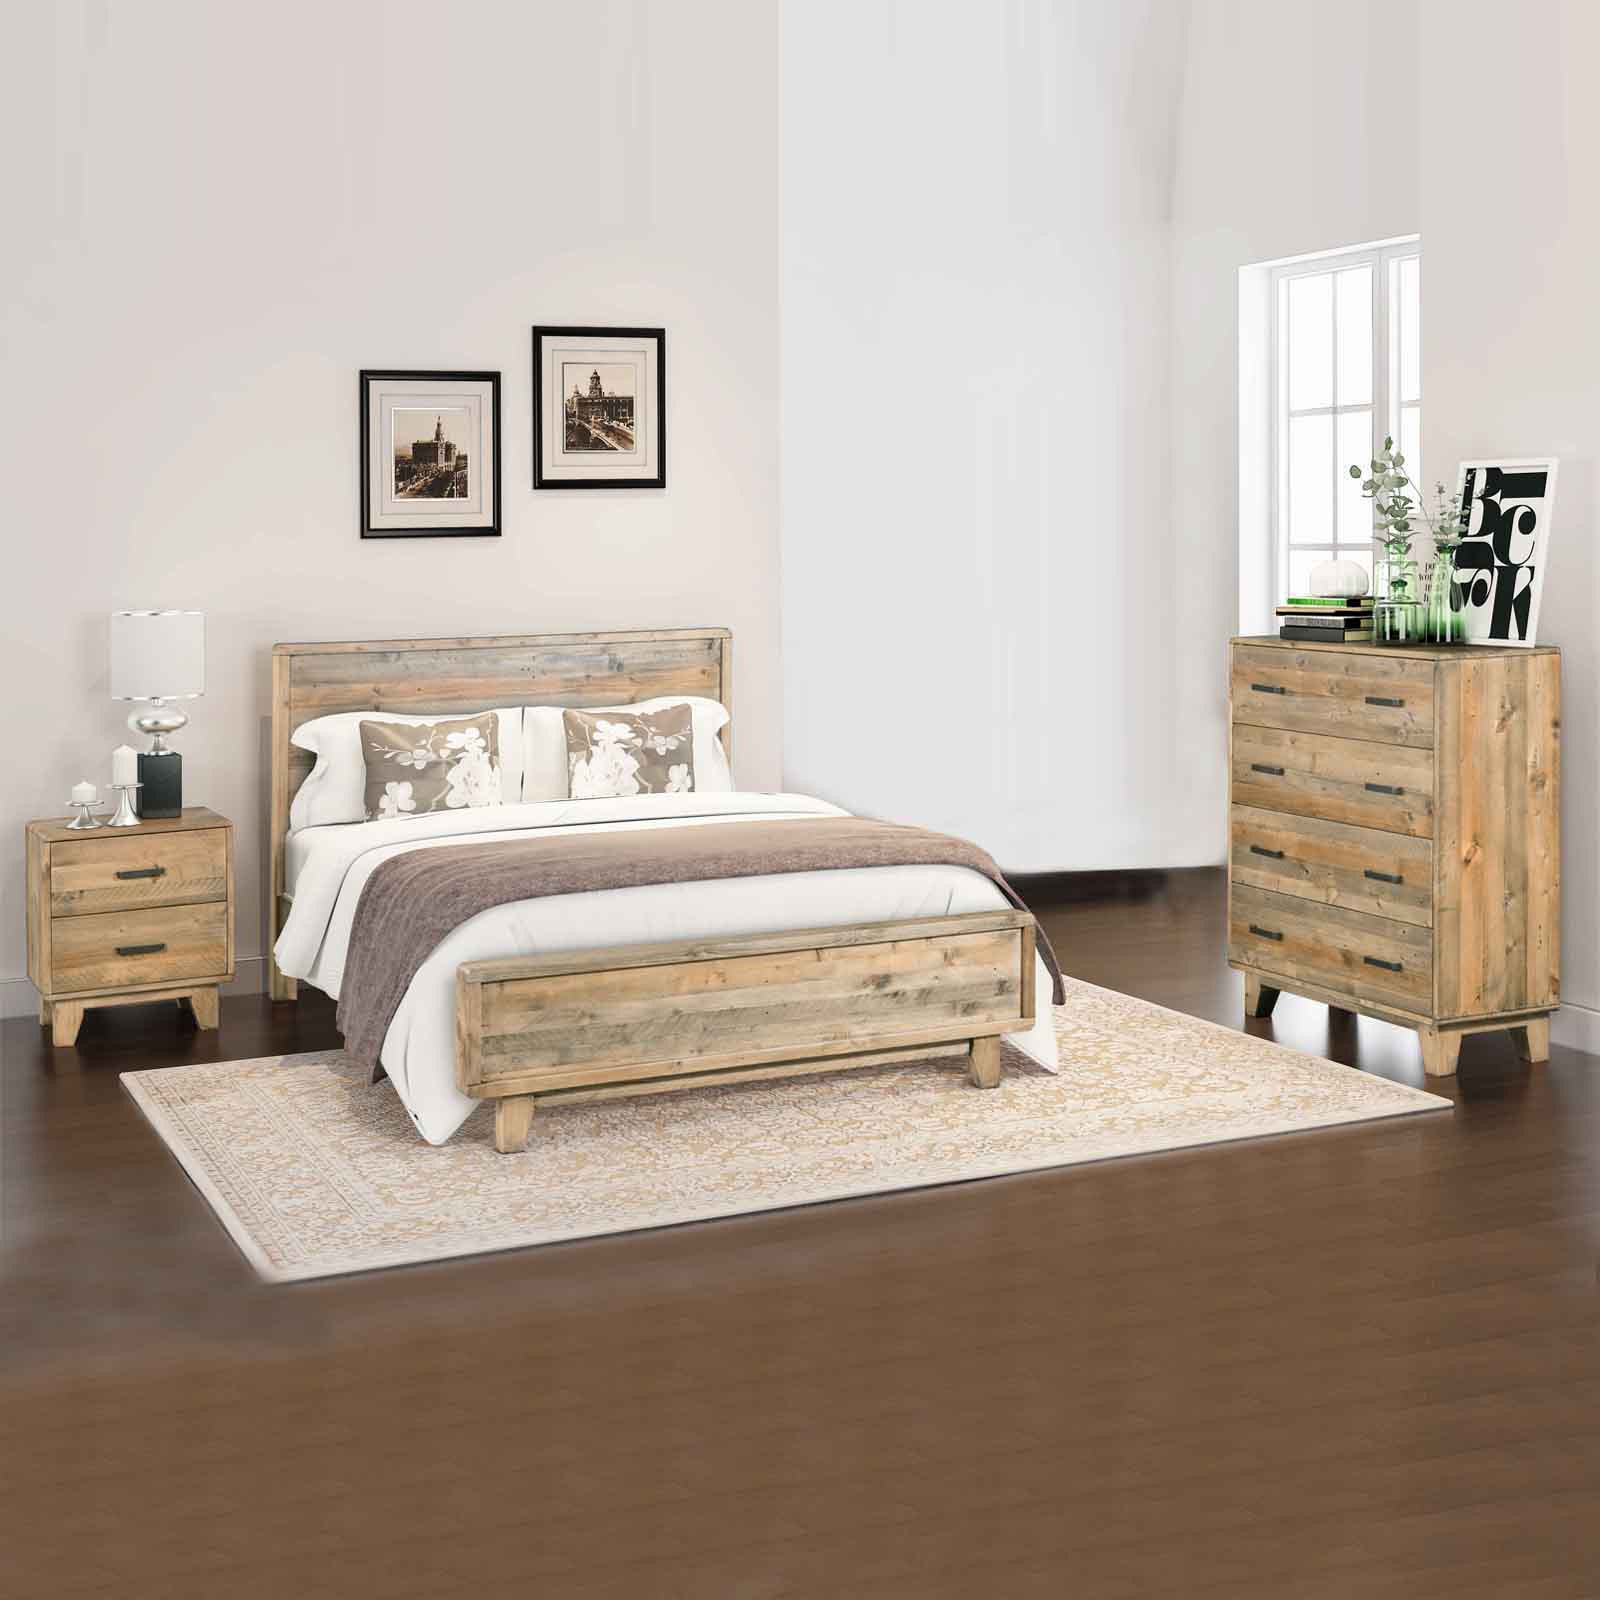 Wesley 4 Pieces Bedroom Suite Queen Size in Solid Wood Antique Design Light Brown 1X Bed, 2X Bedside